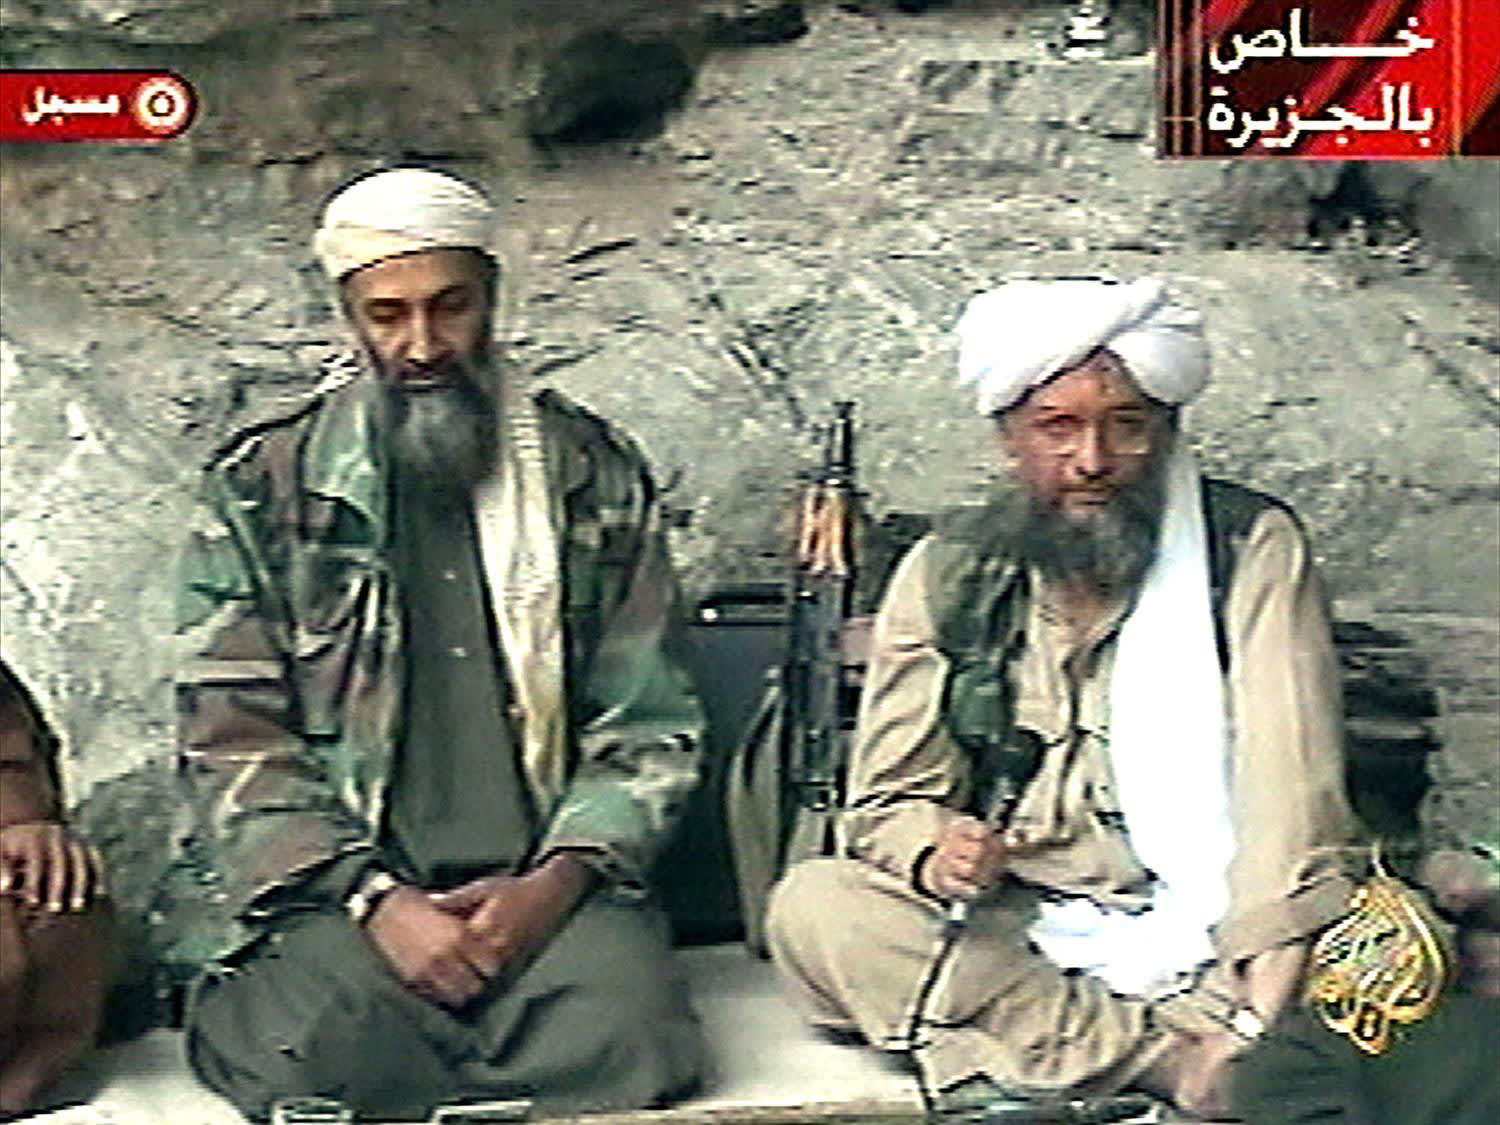 U.S. drone strike on al-Zawahiri in Kabul undermines Taliban